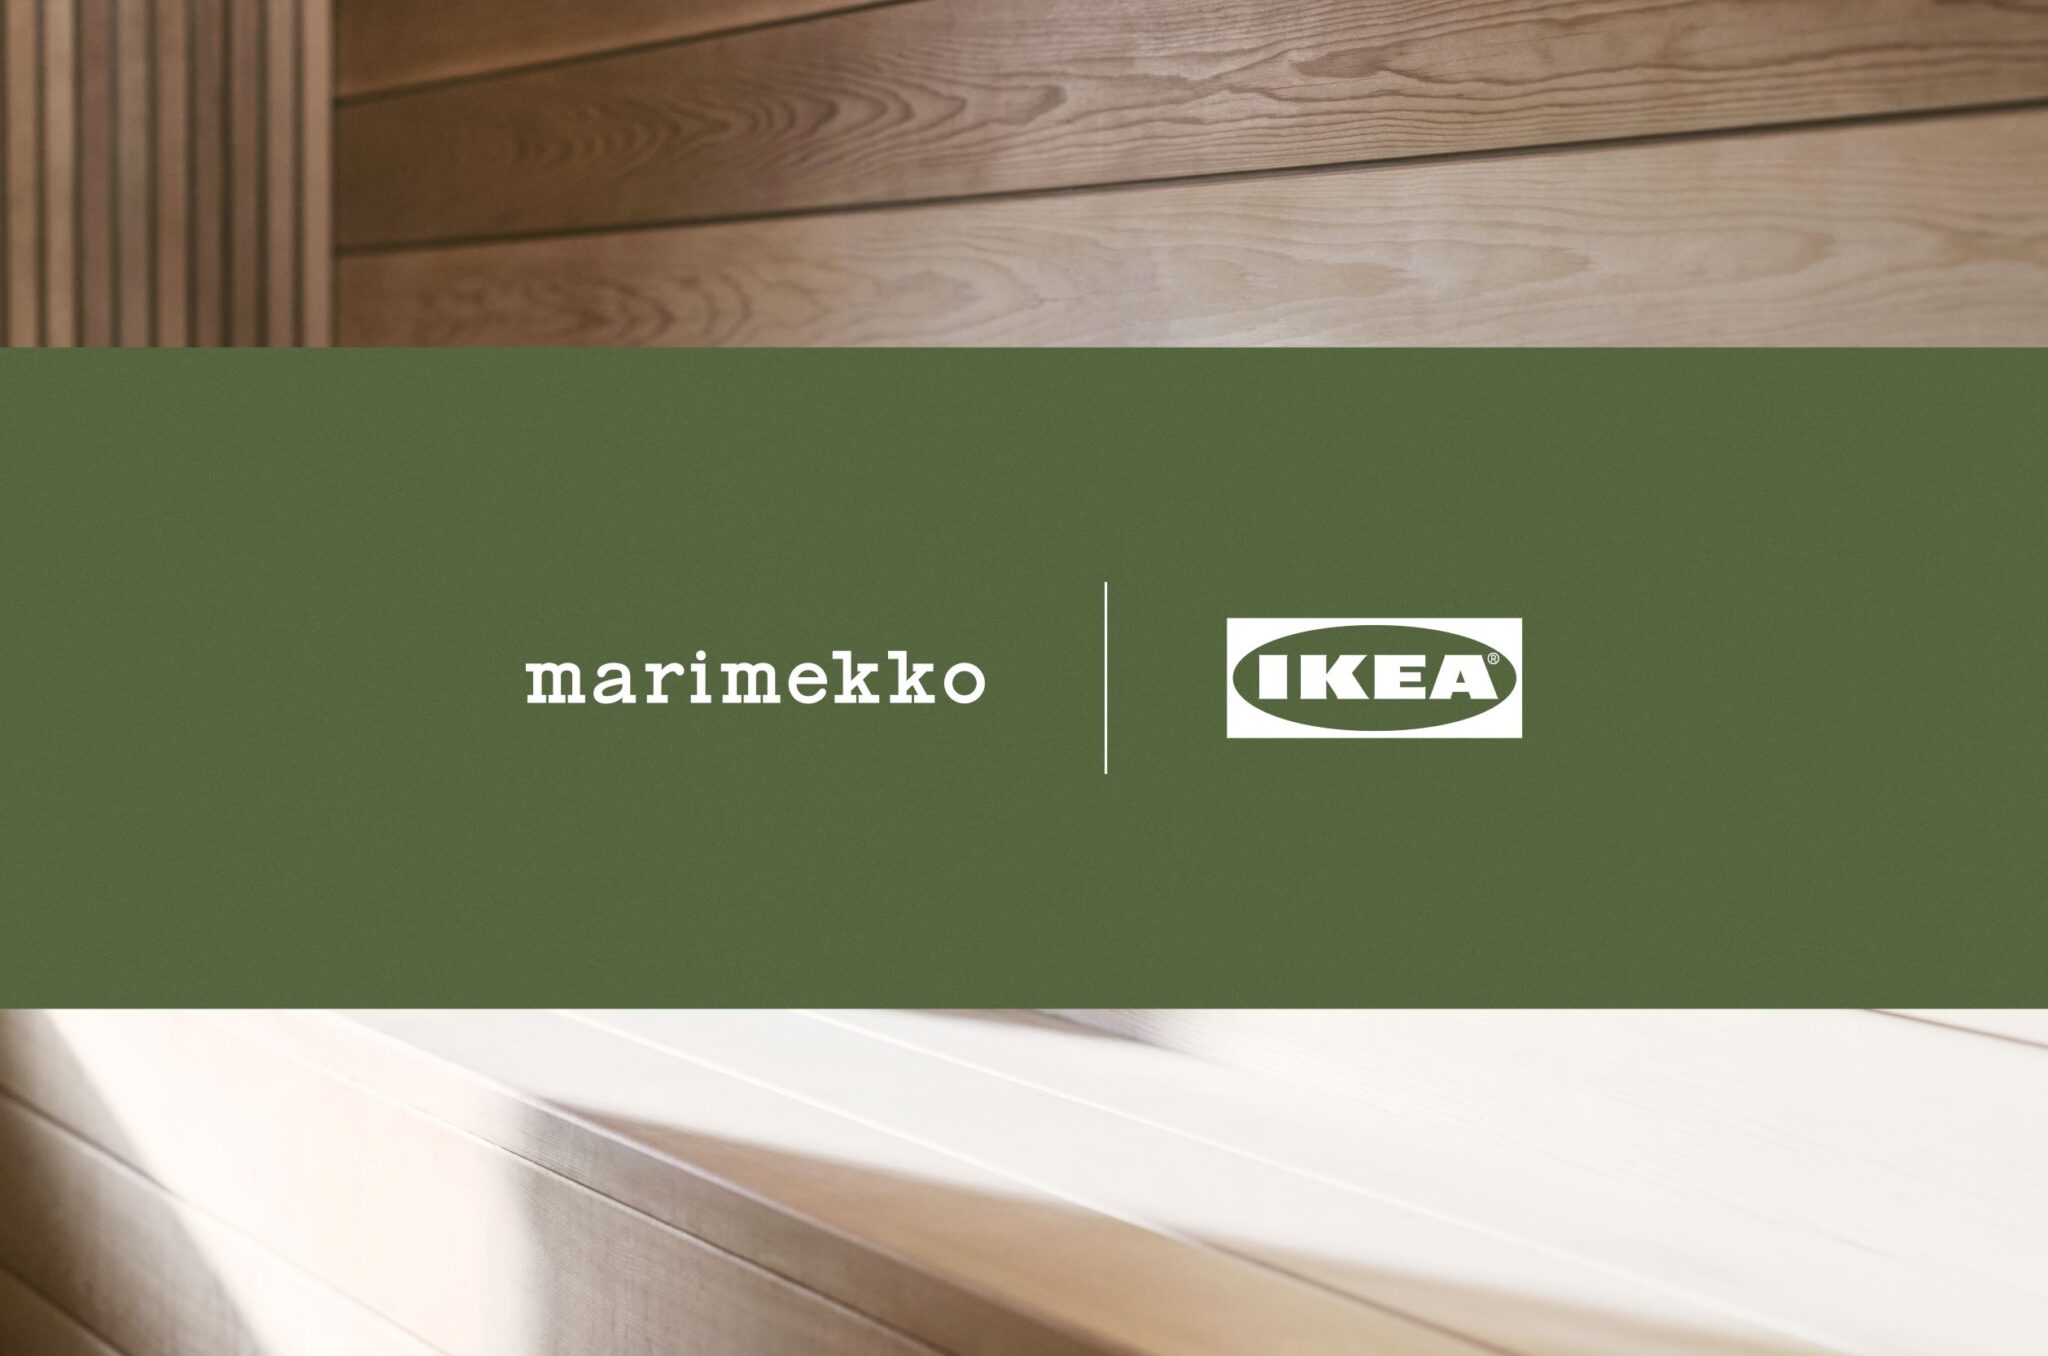 Ikea x Marimekko Collaboration